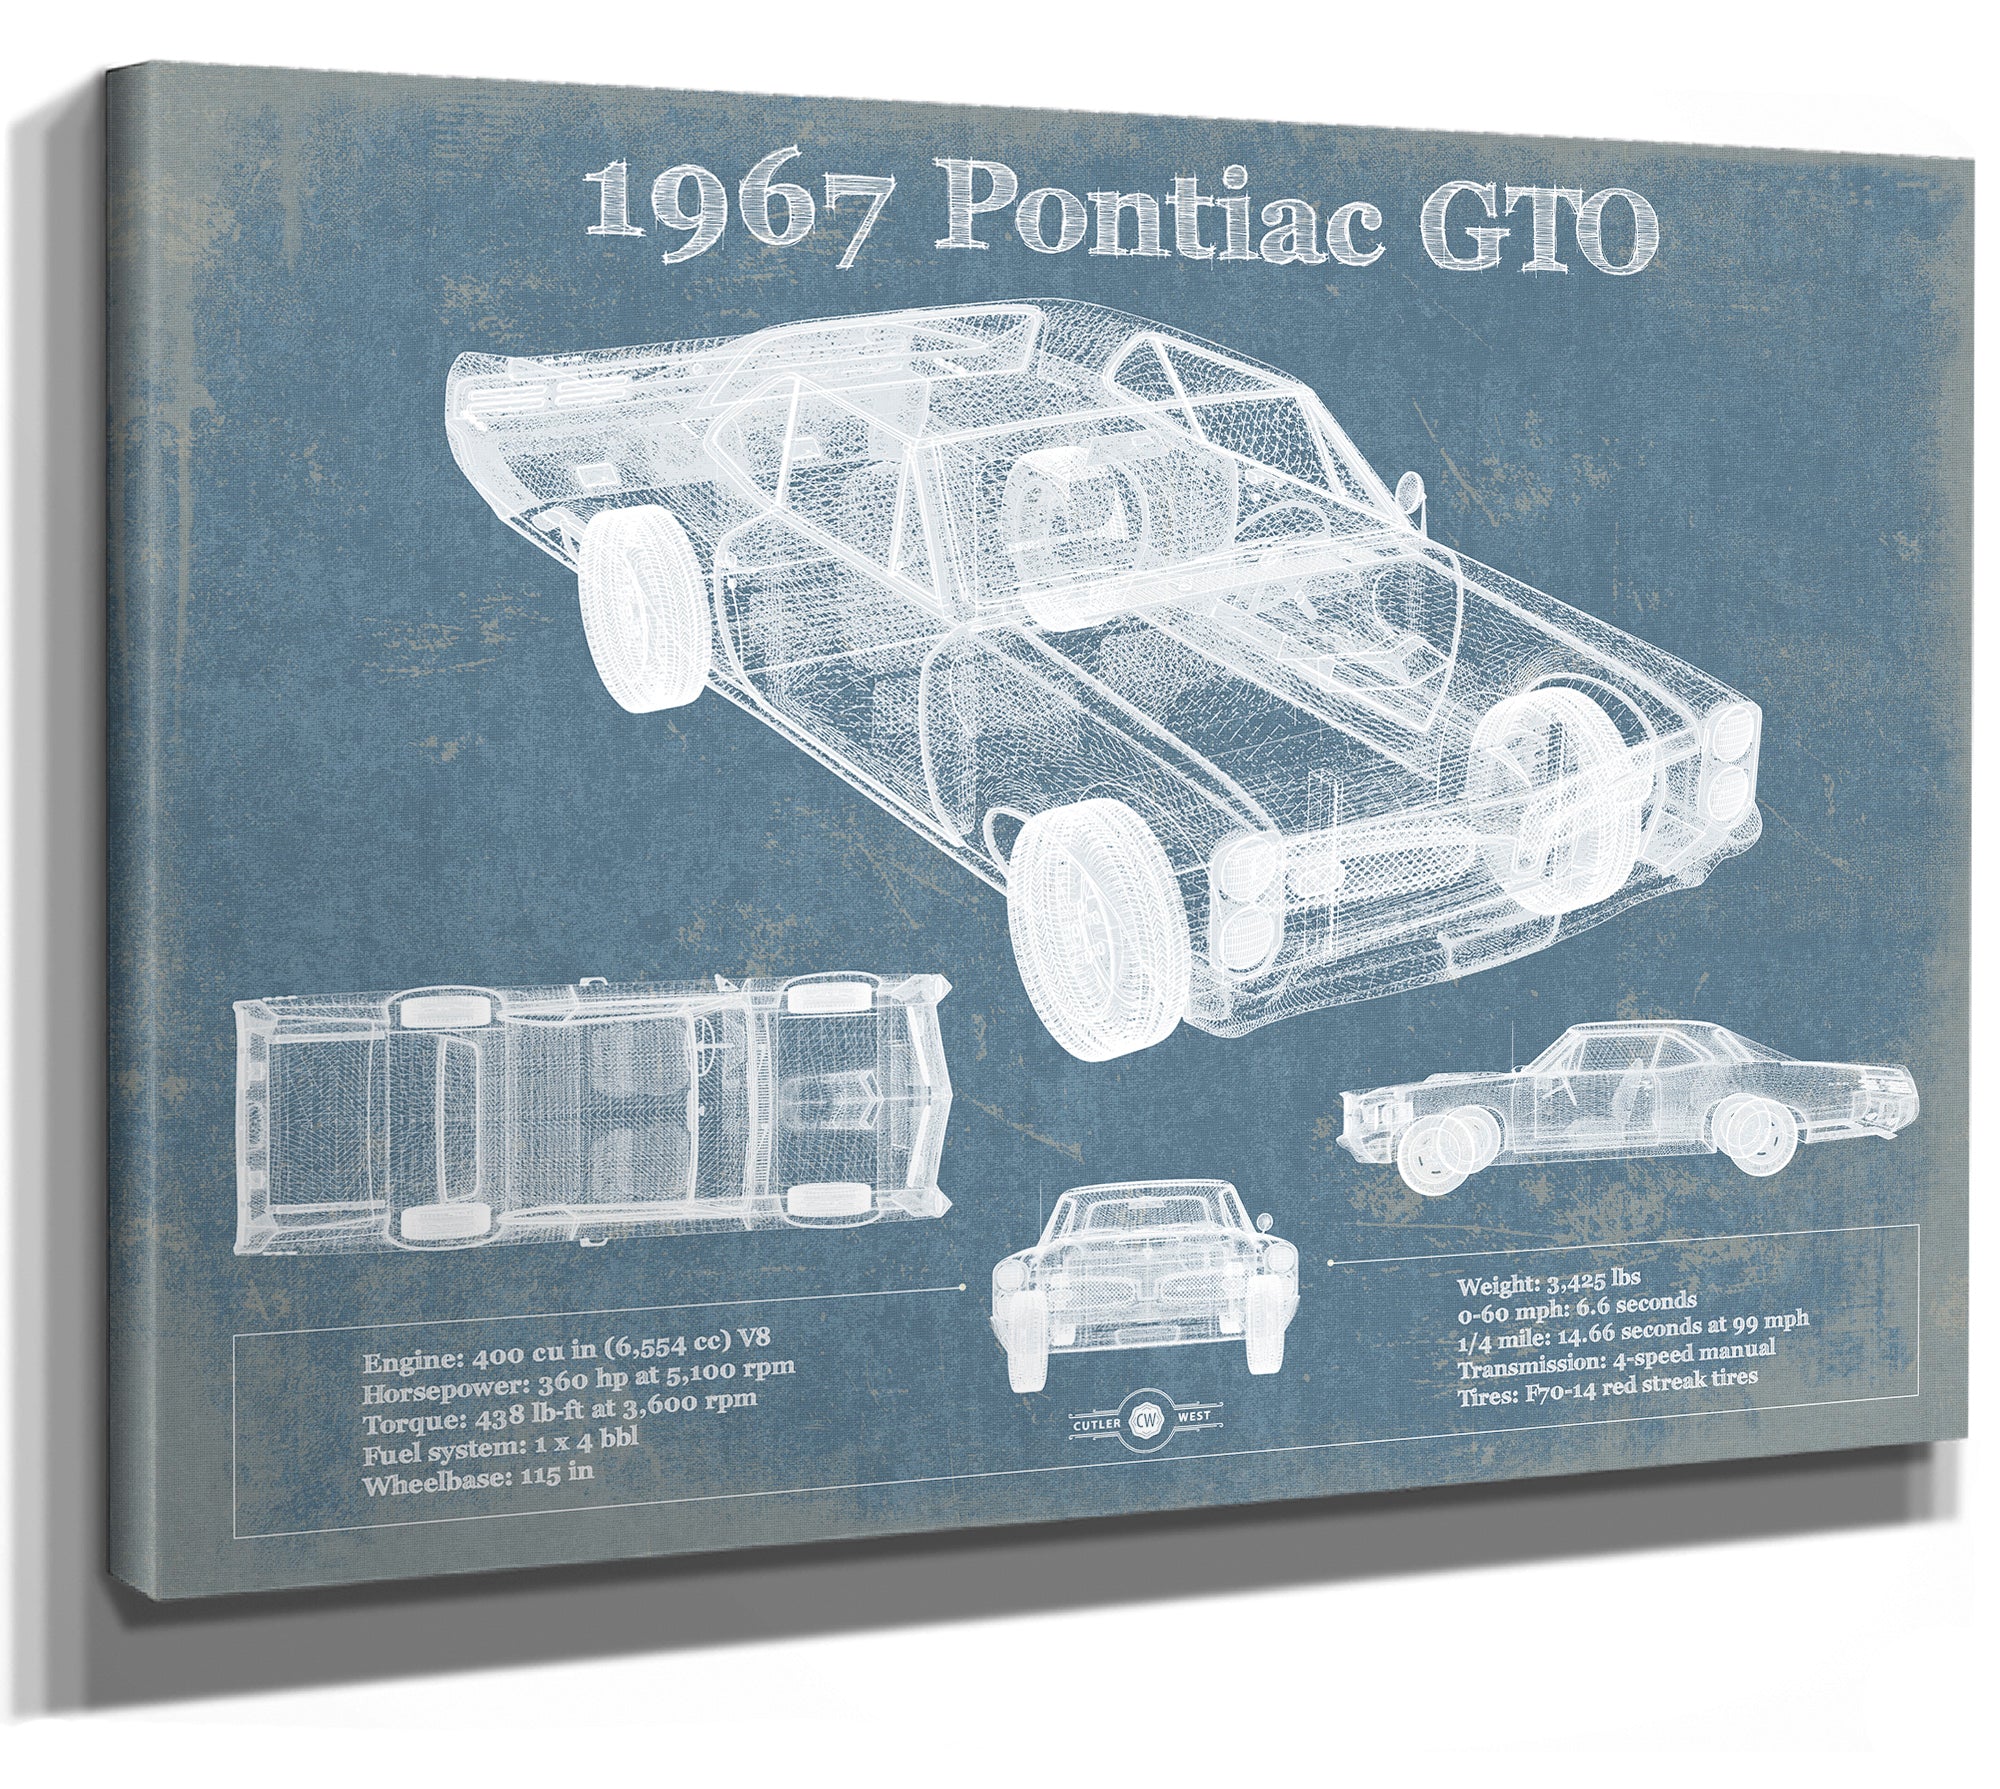 1967 Pontiac GTO Vintage Auto Print